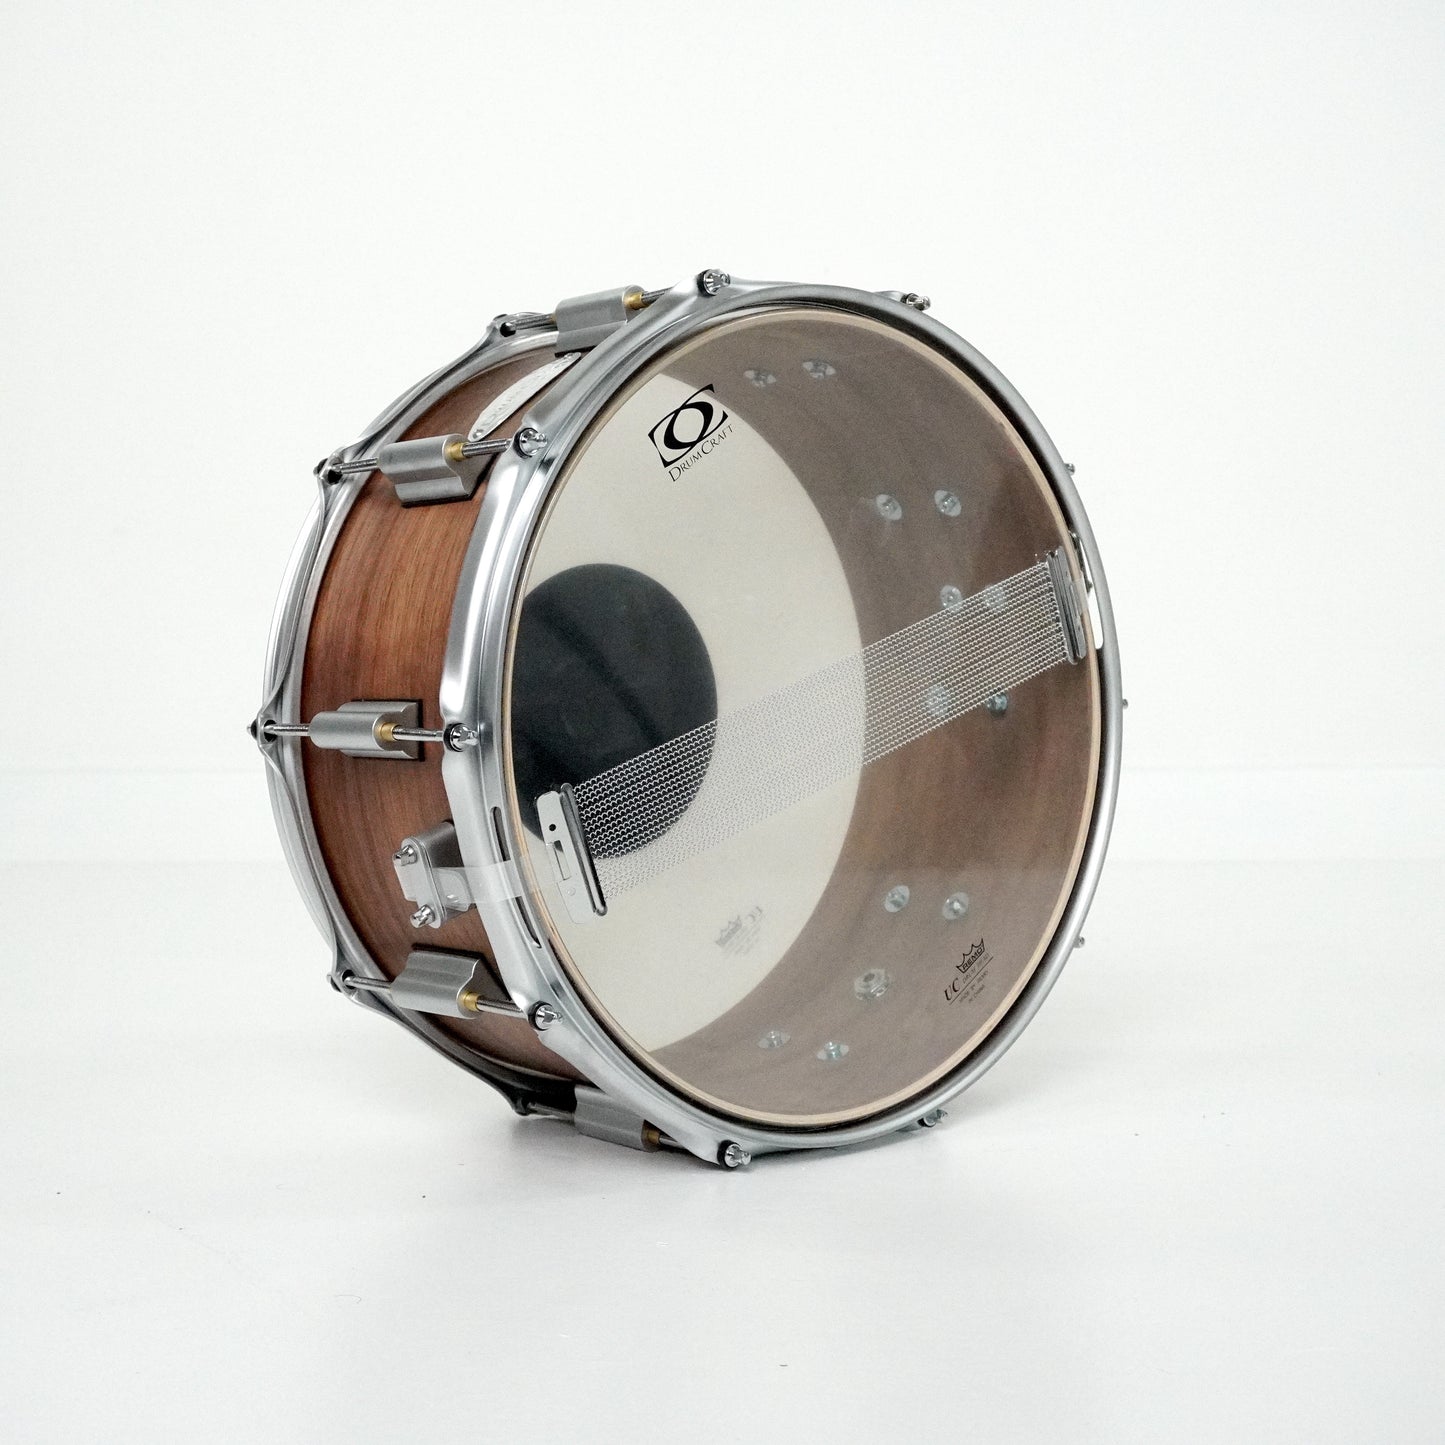 DrumCraft Series 6 14” x 6.5” Snare Drum